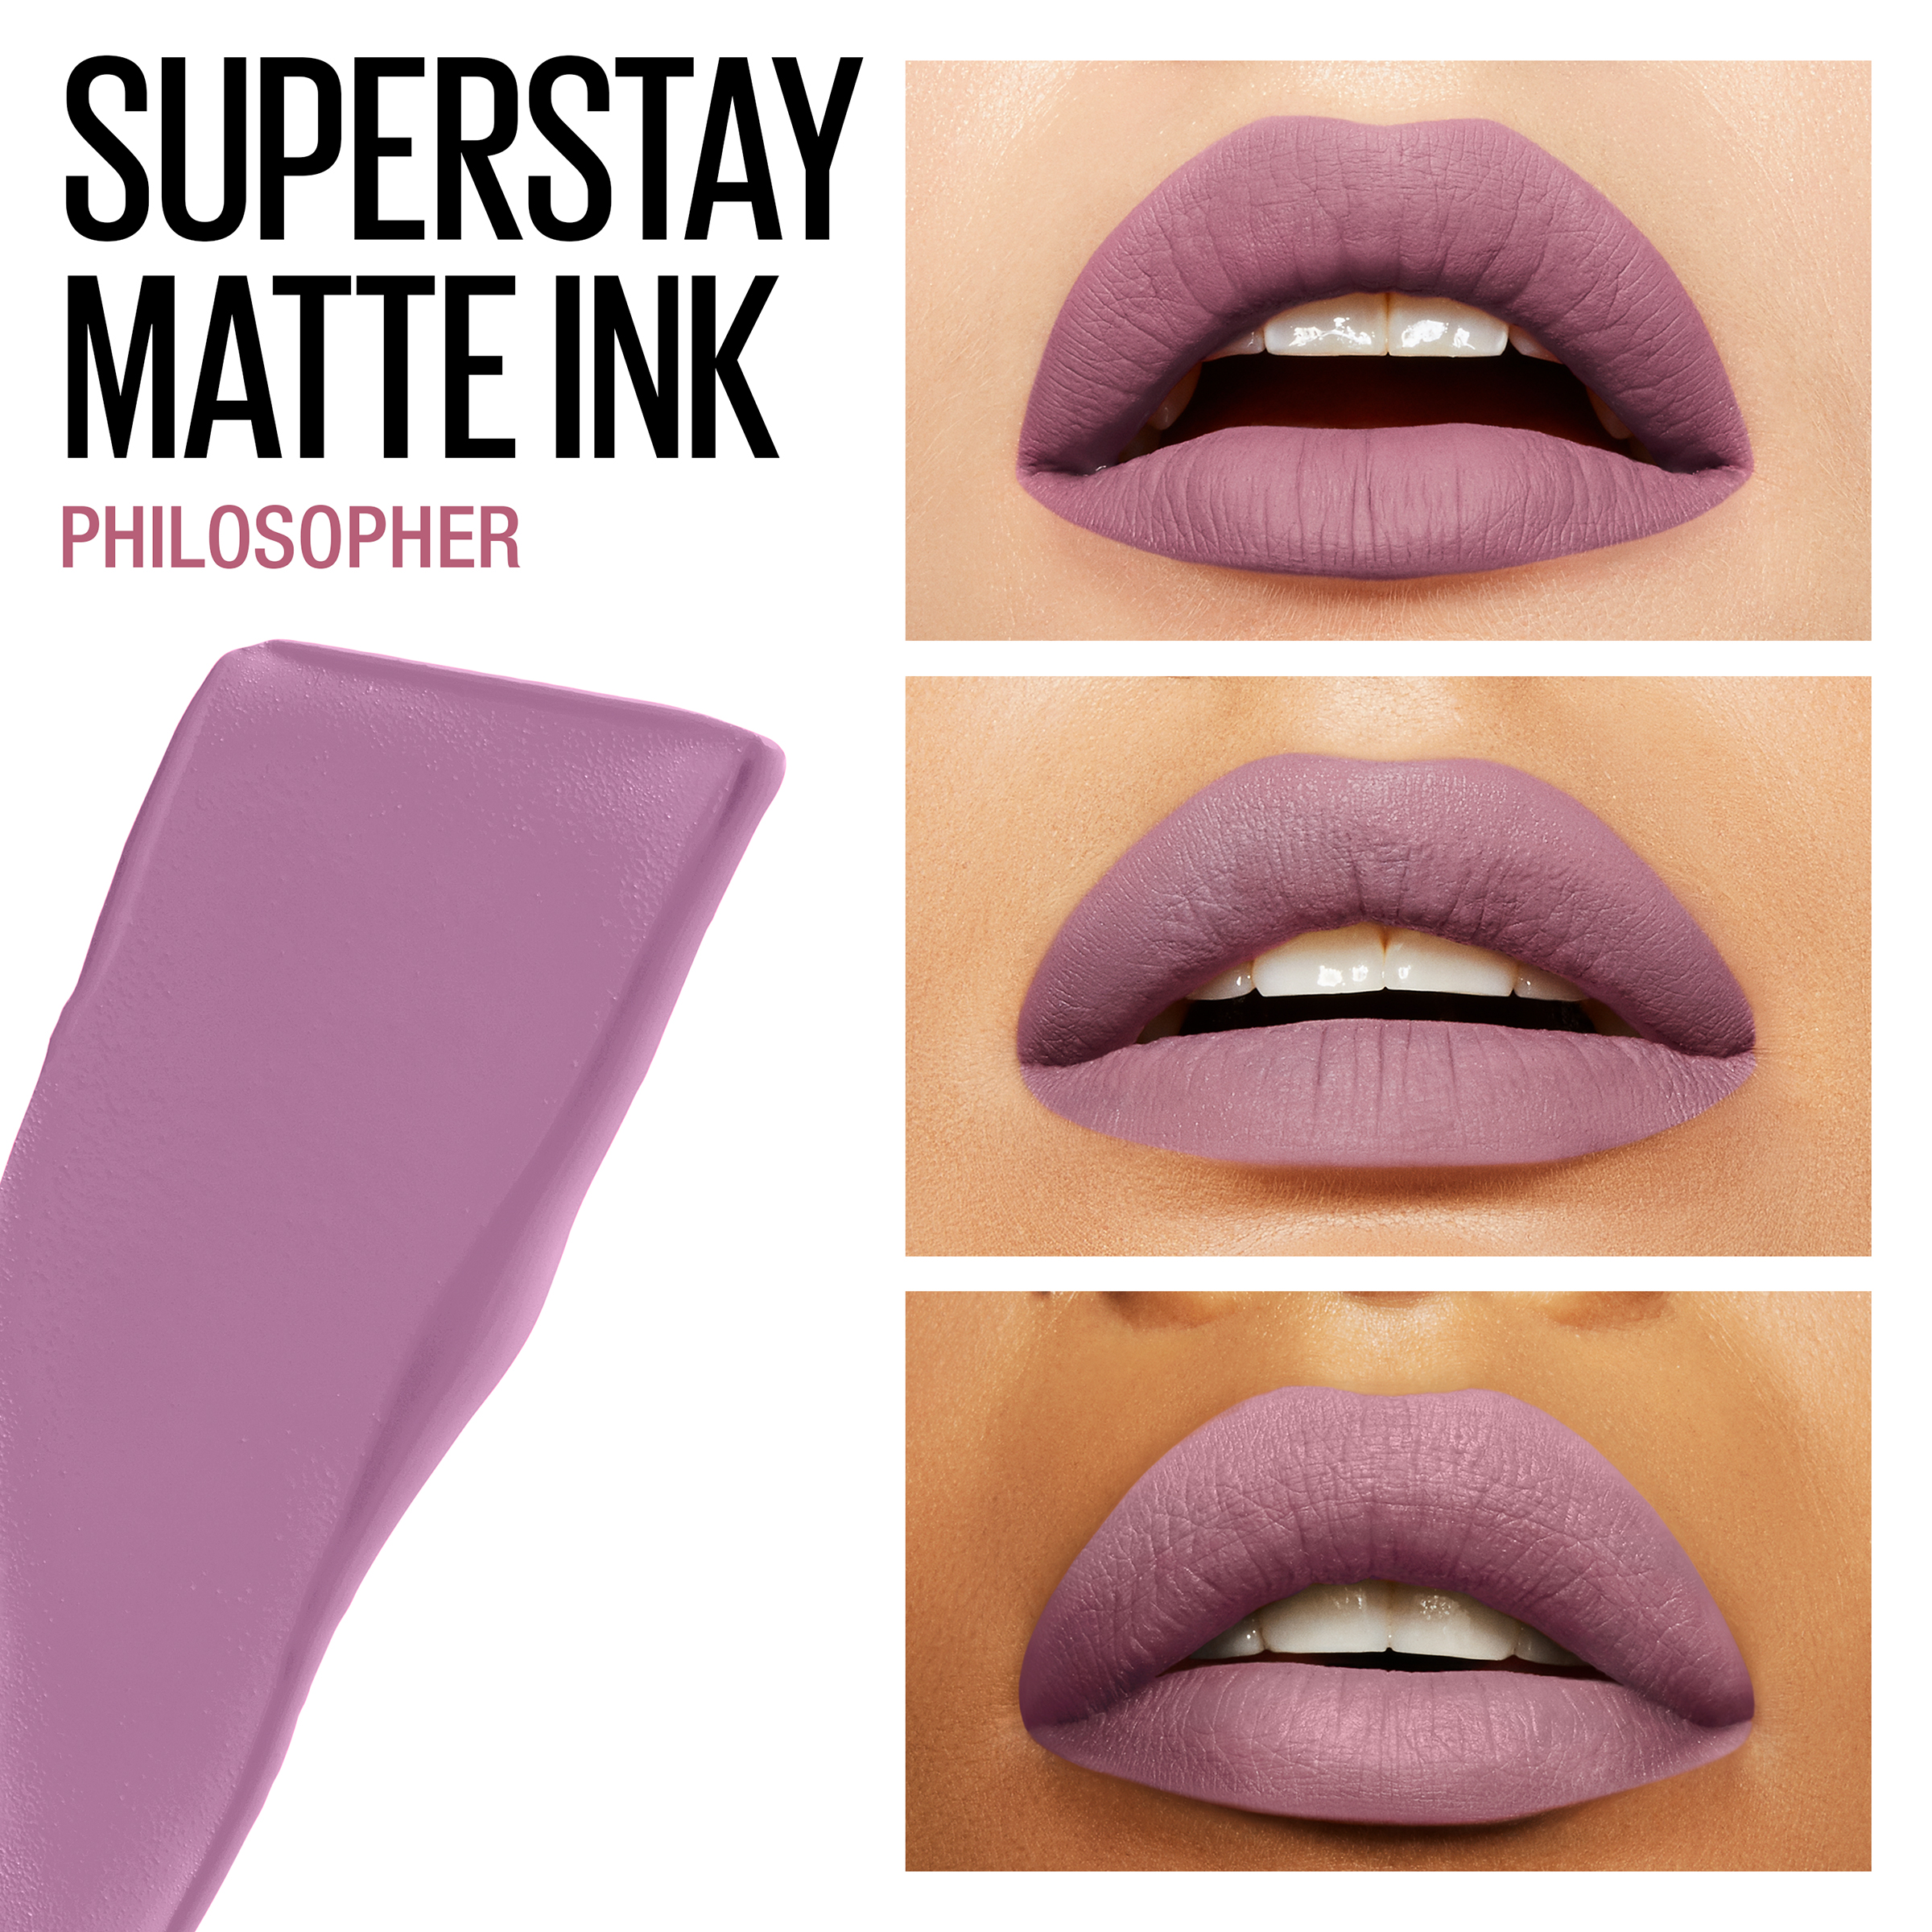 Maybelline Super Stay Matte Ink Un nude Liquid Lipstick, Philosopher - image 3 of 9